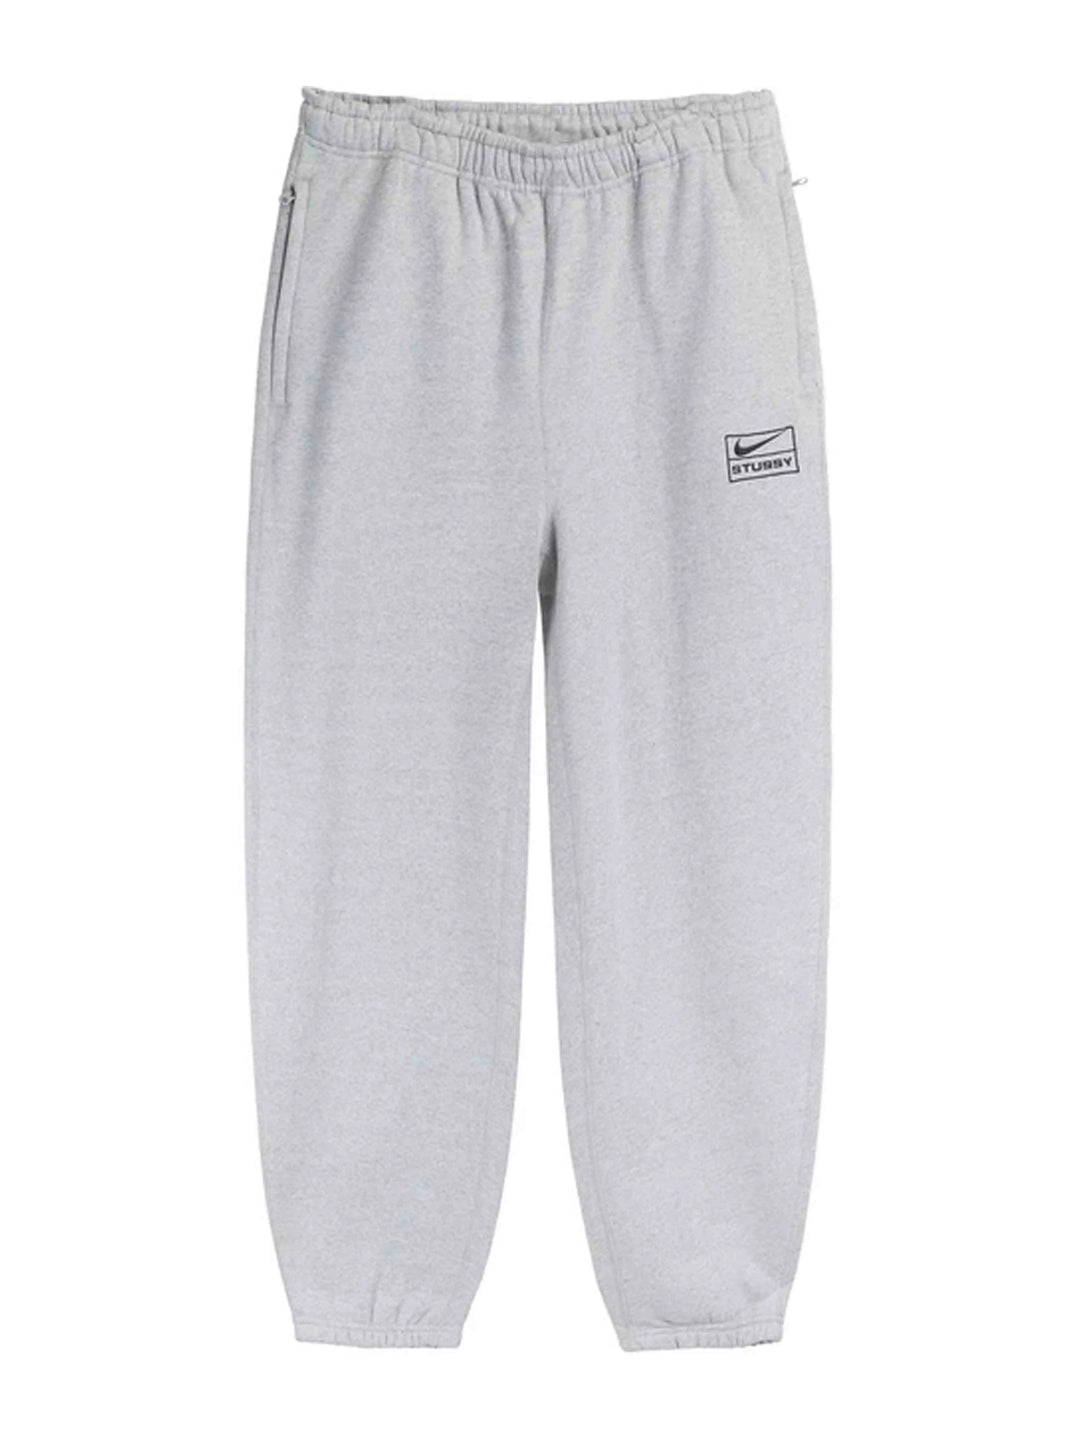 Nike x Stussy Sweatpants Grey [SS22] Prior